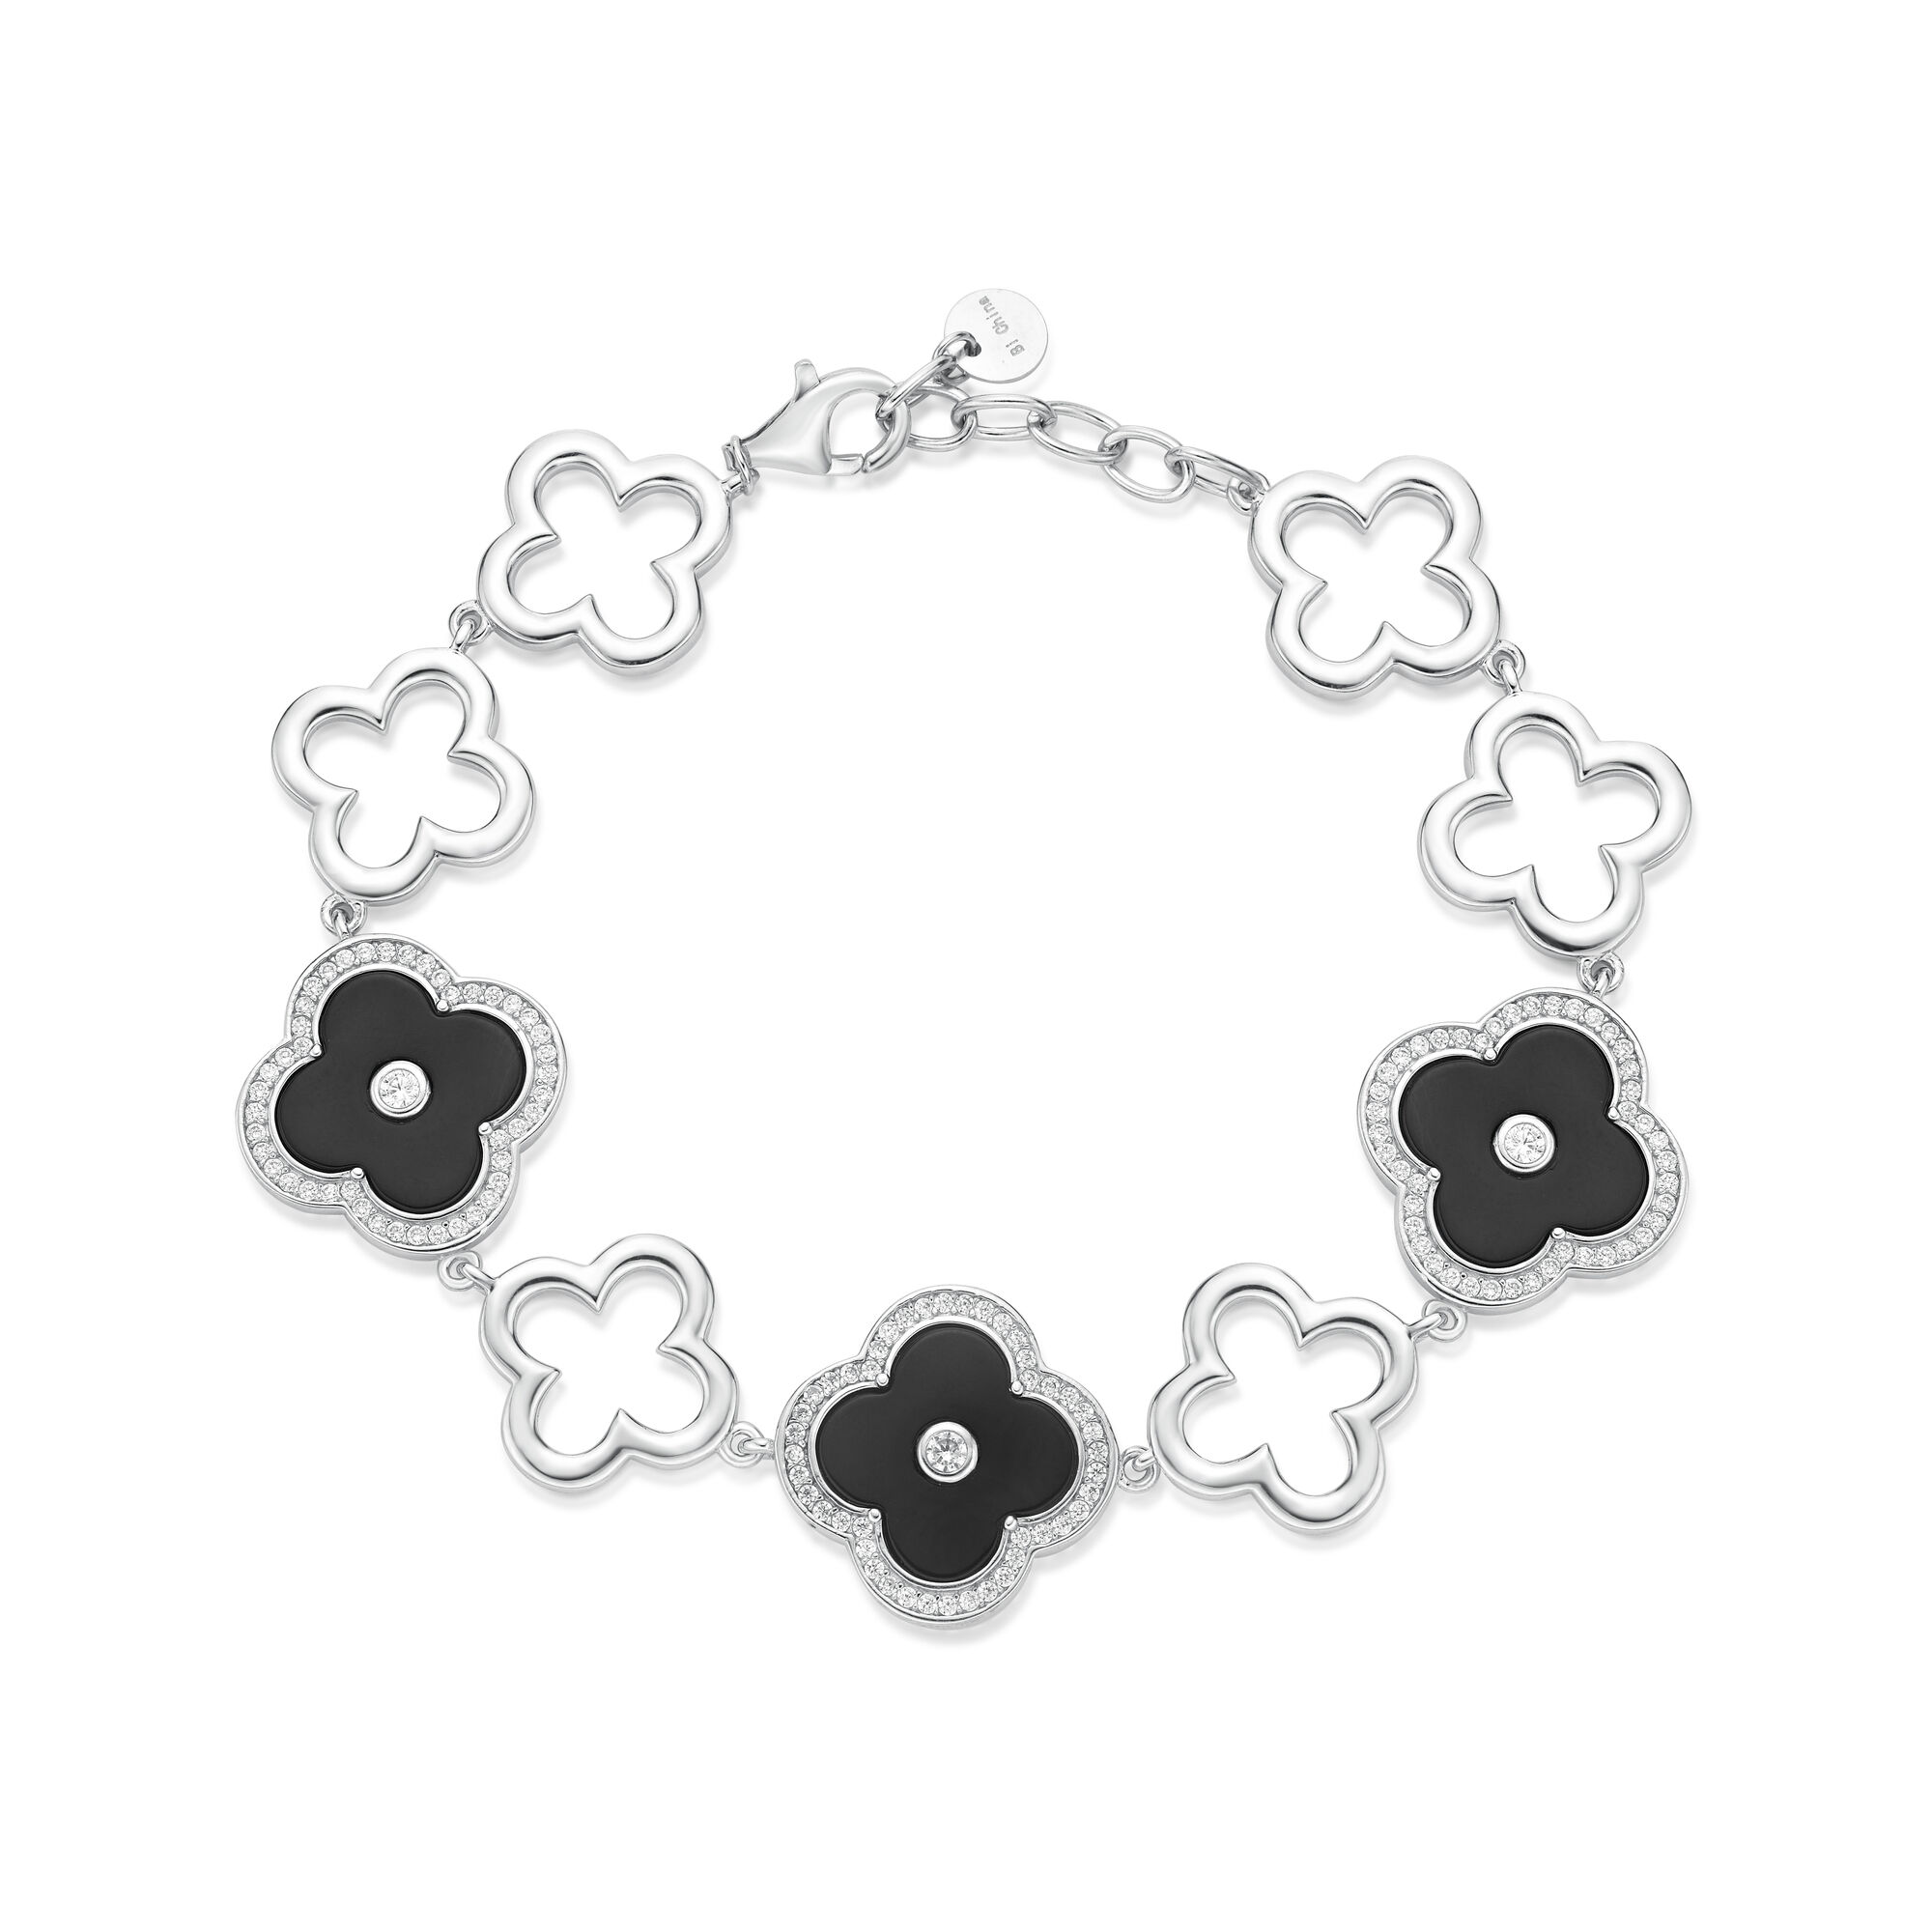 48785-bracelet-fashion-jewelry-sterling-silver-cubic-zirconia-round-1mm-black-onyx-48785-2.jpg